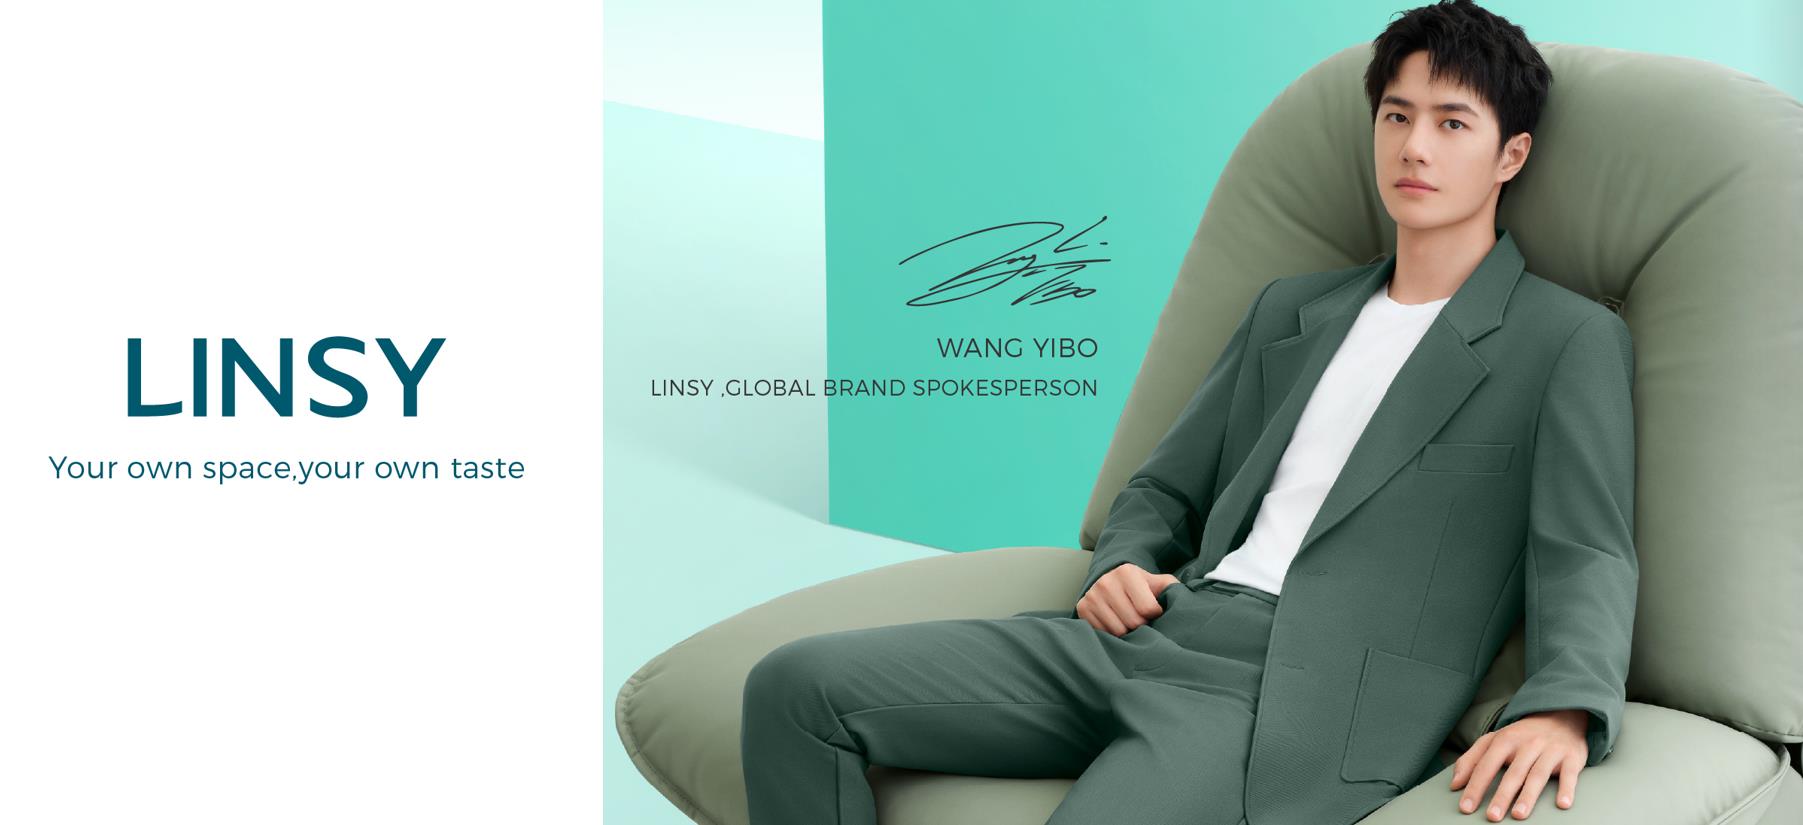 WANG YIBO, porte-parole de la marque mondiale LINSY
